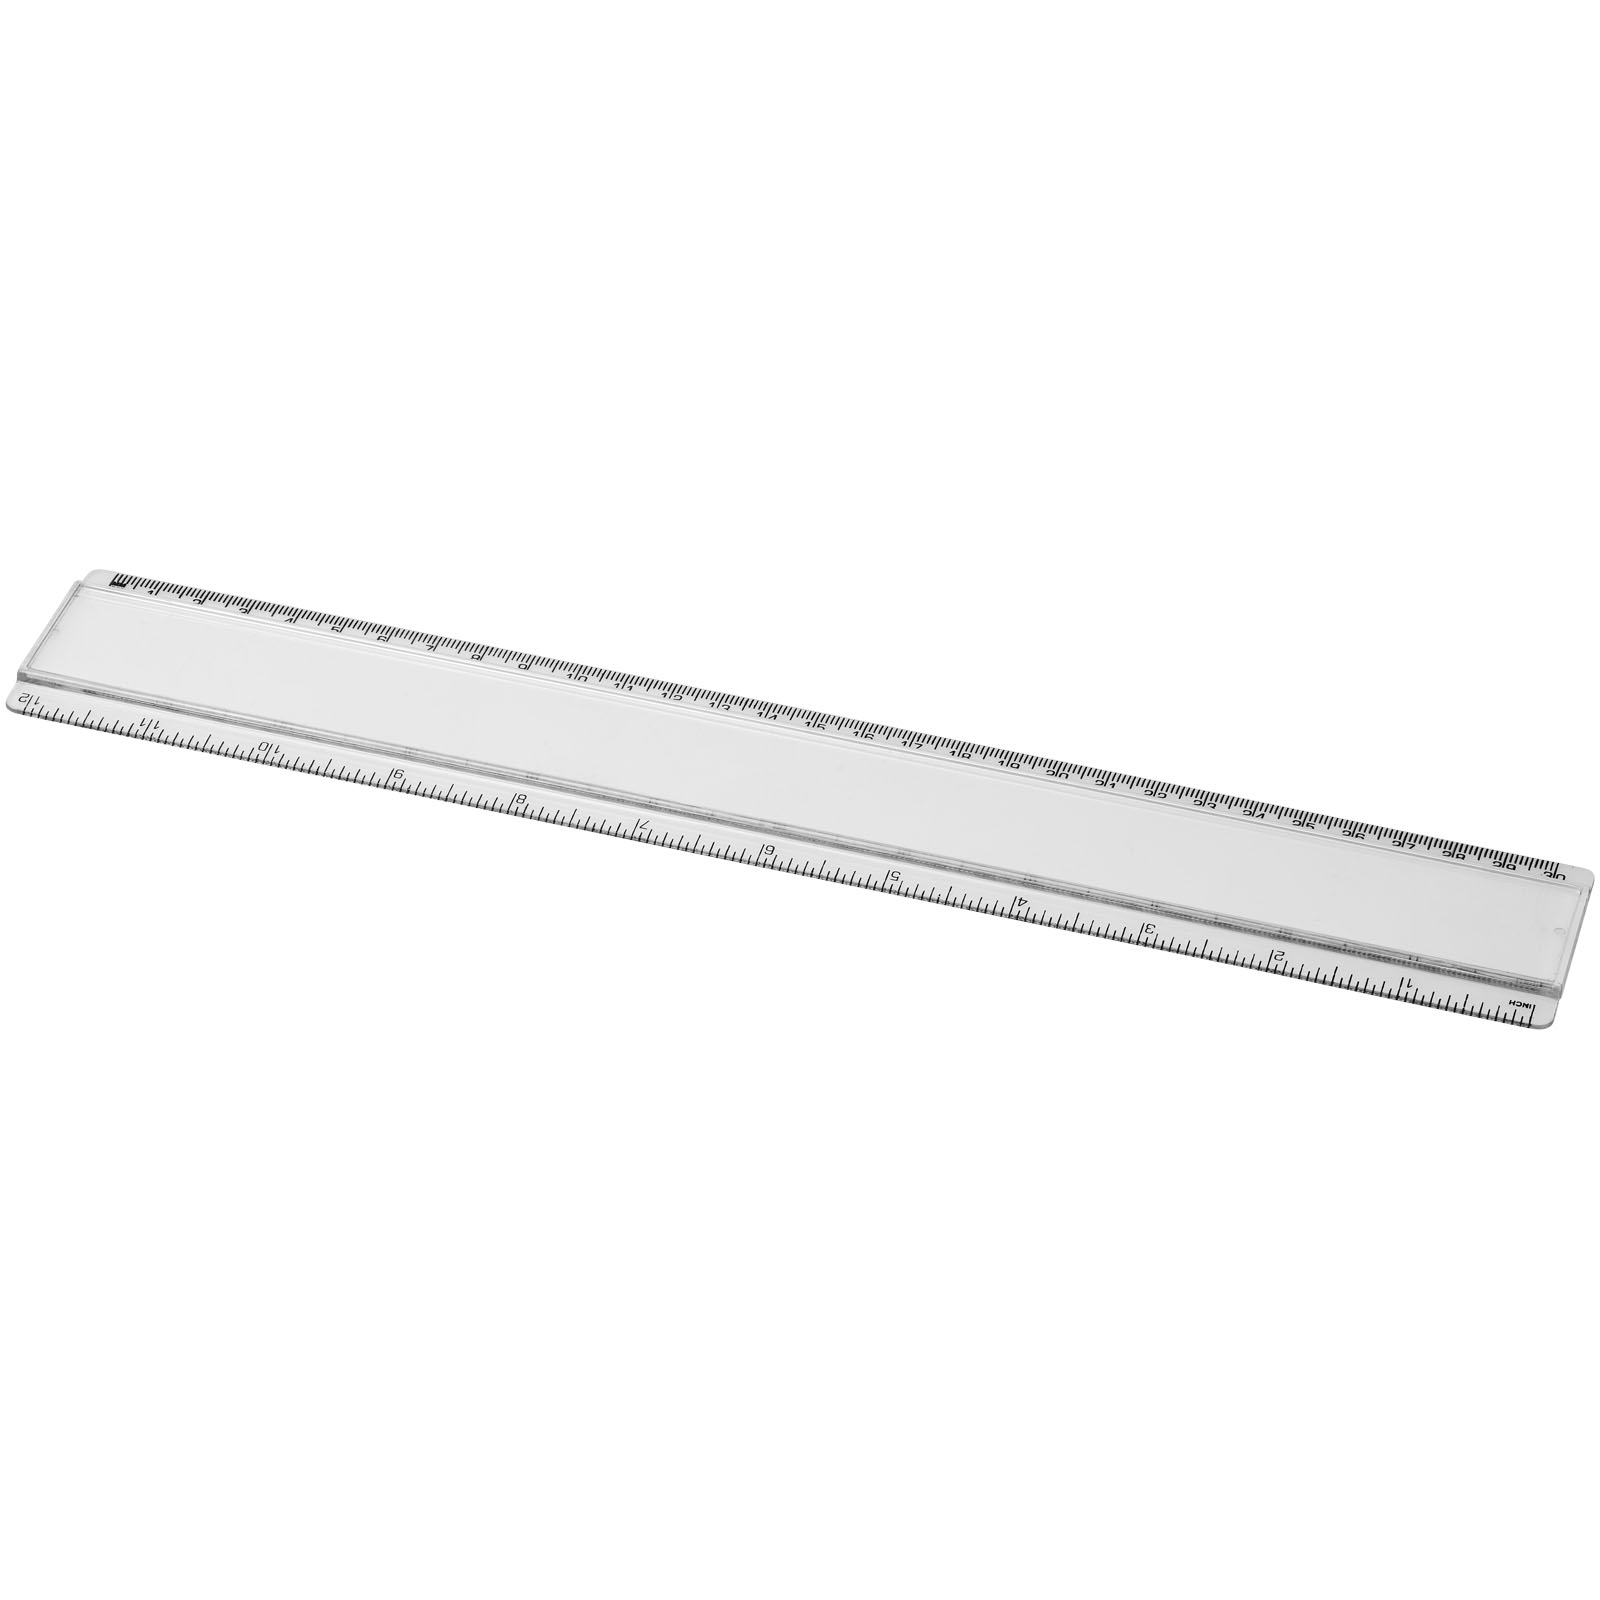 Notebooks & Desk Essentials - Ellison 30 cm plastic insert ruler